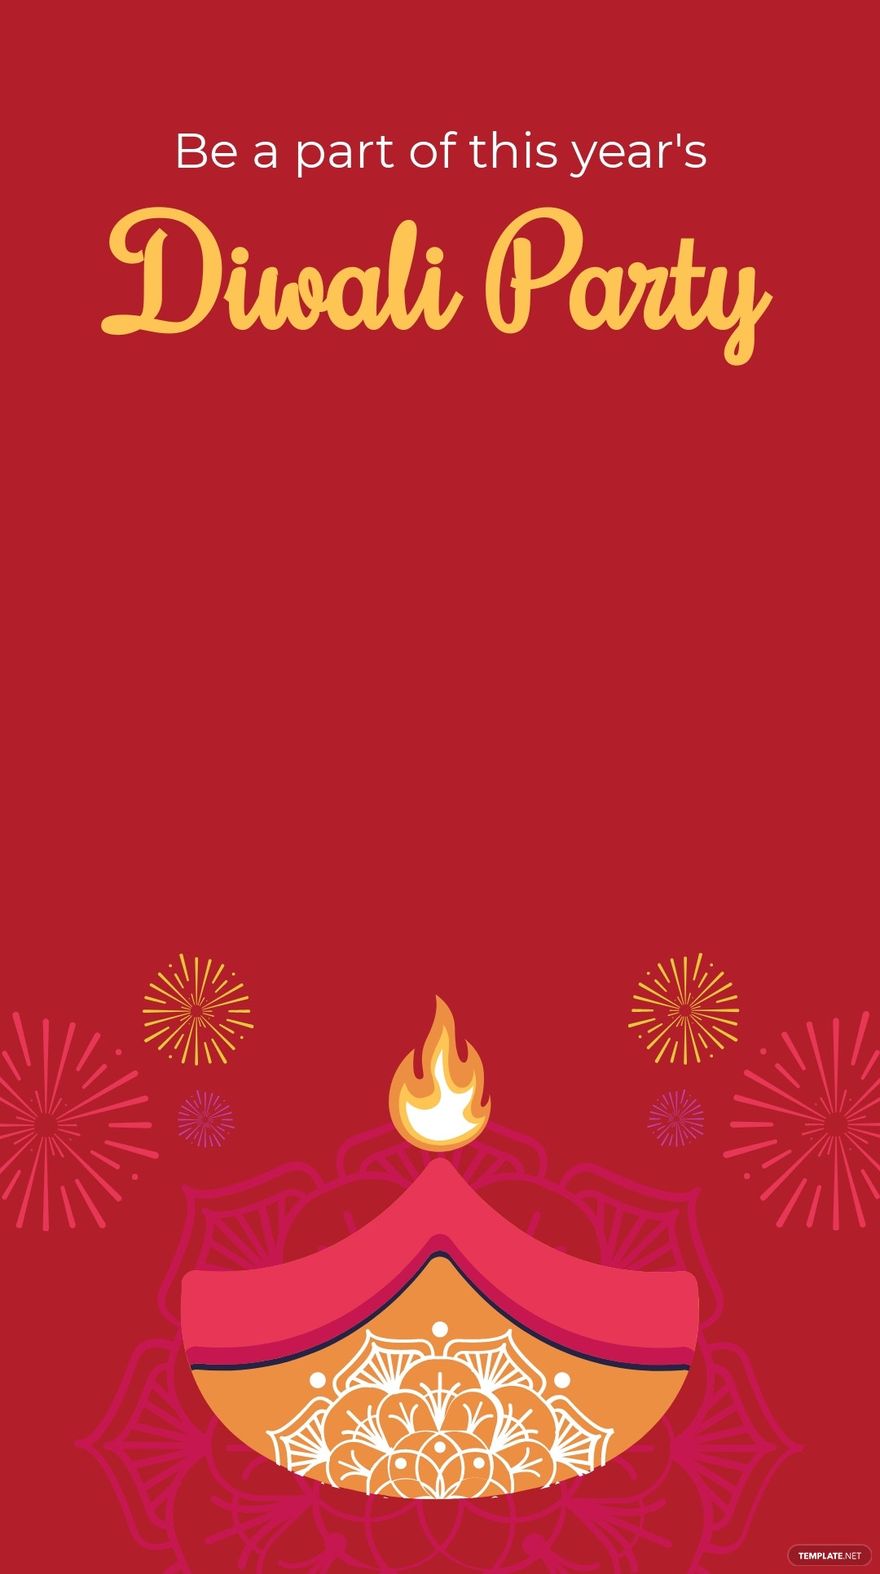 Diwali Party Snapchat Geofilter